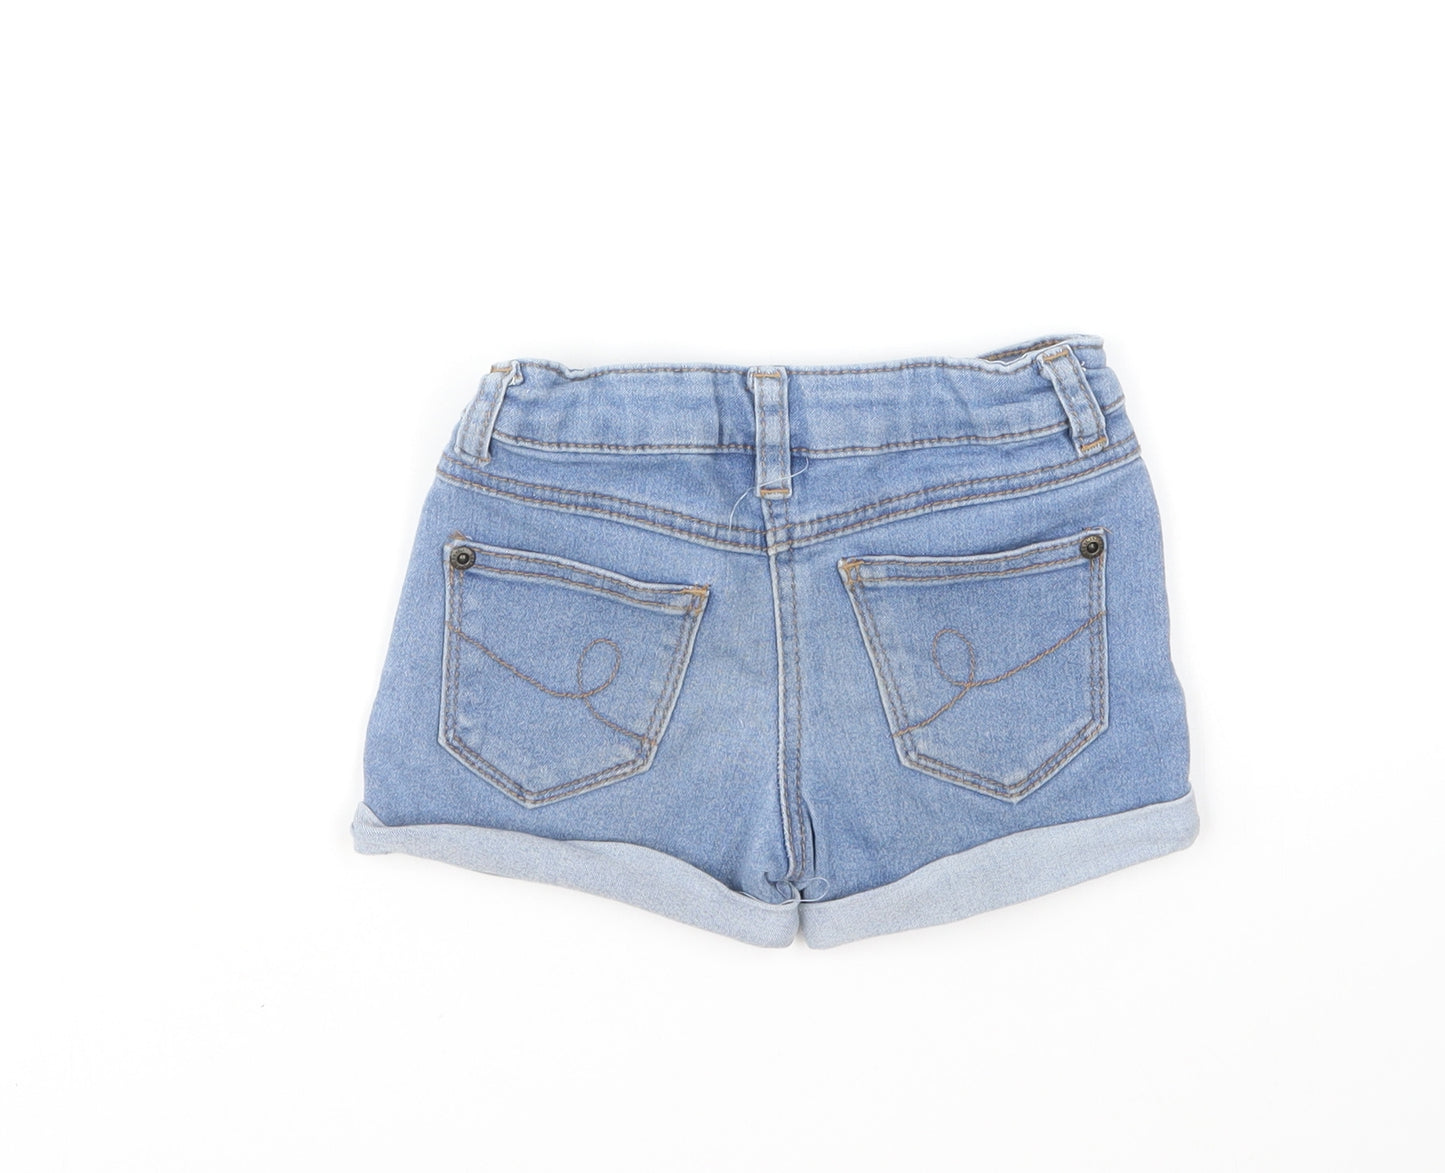 Denim & Co. Girls Blue Cotton Hot Pants Shorts Size 2-3 Years Regular Snap